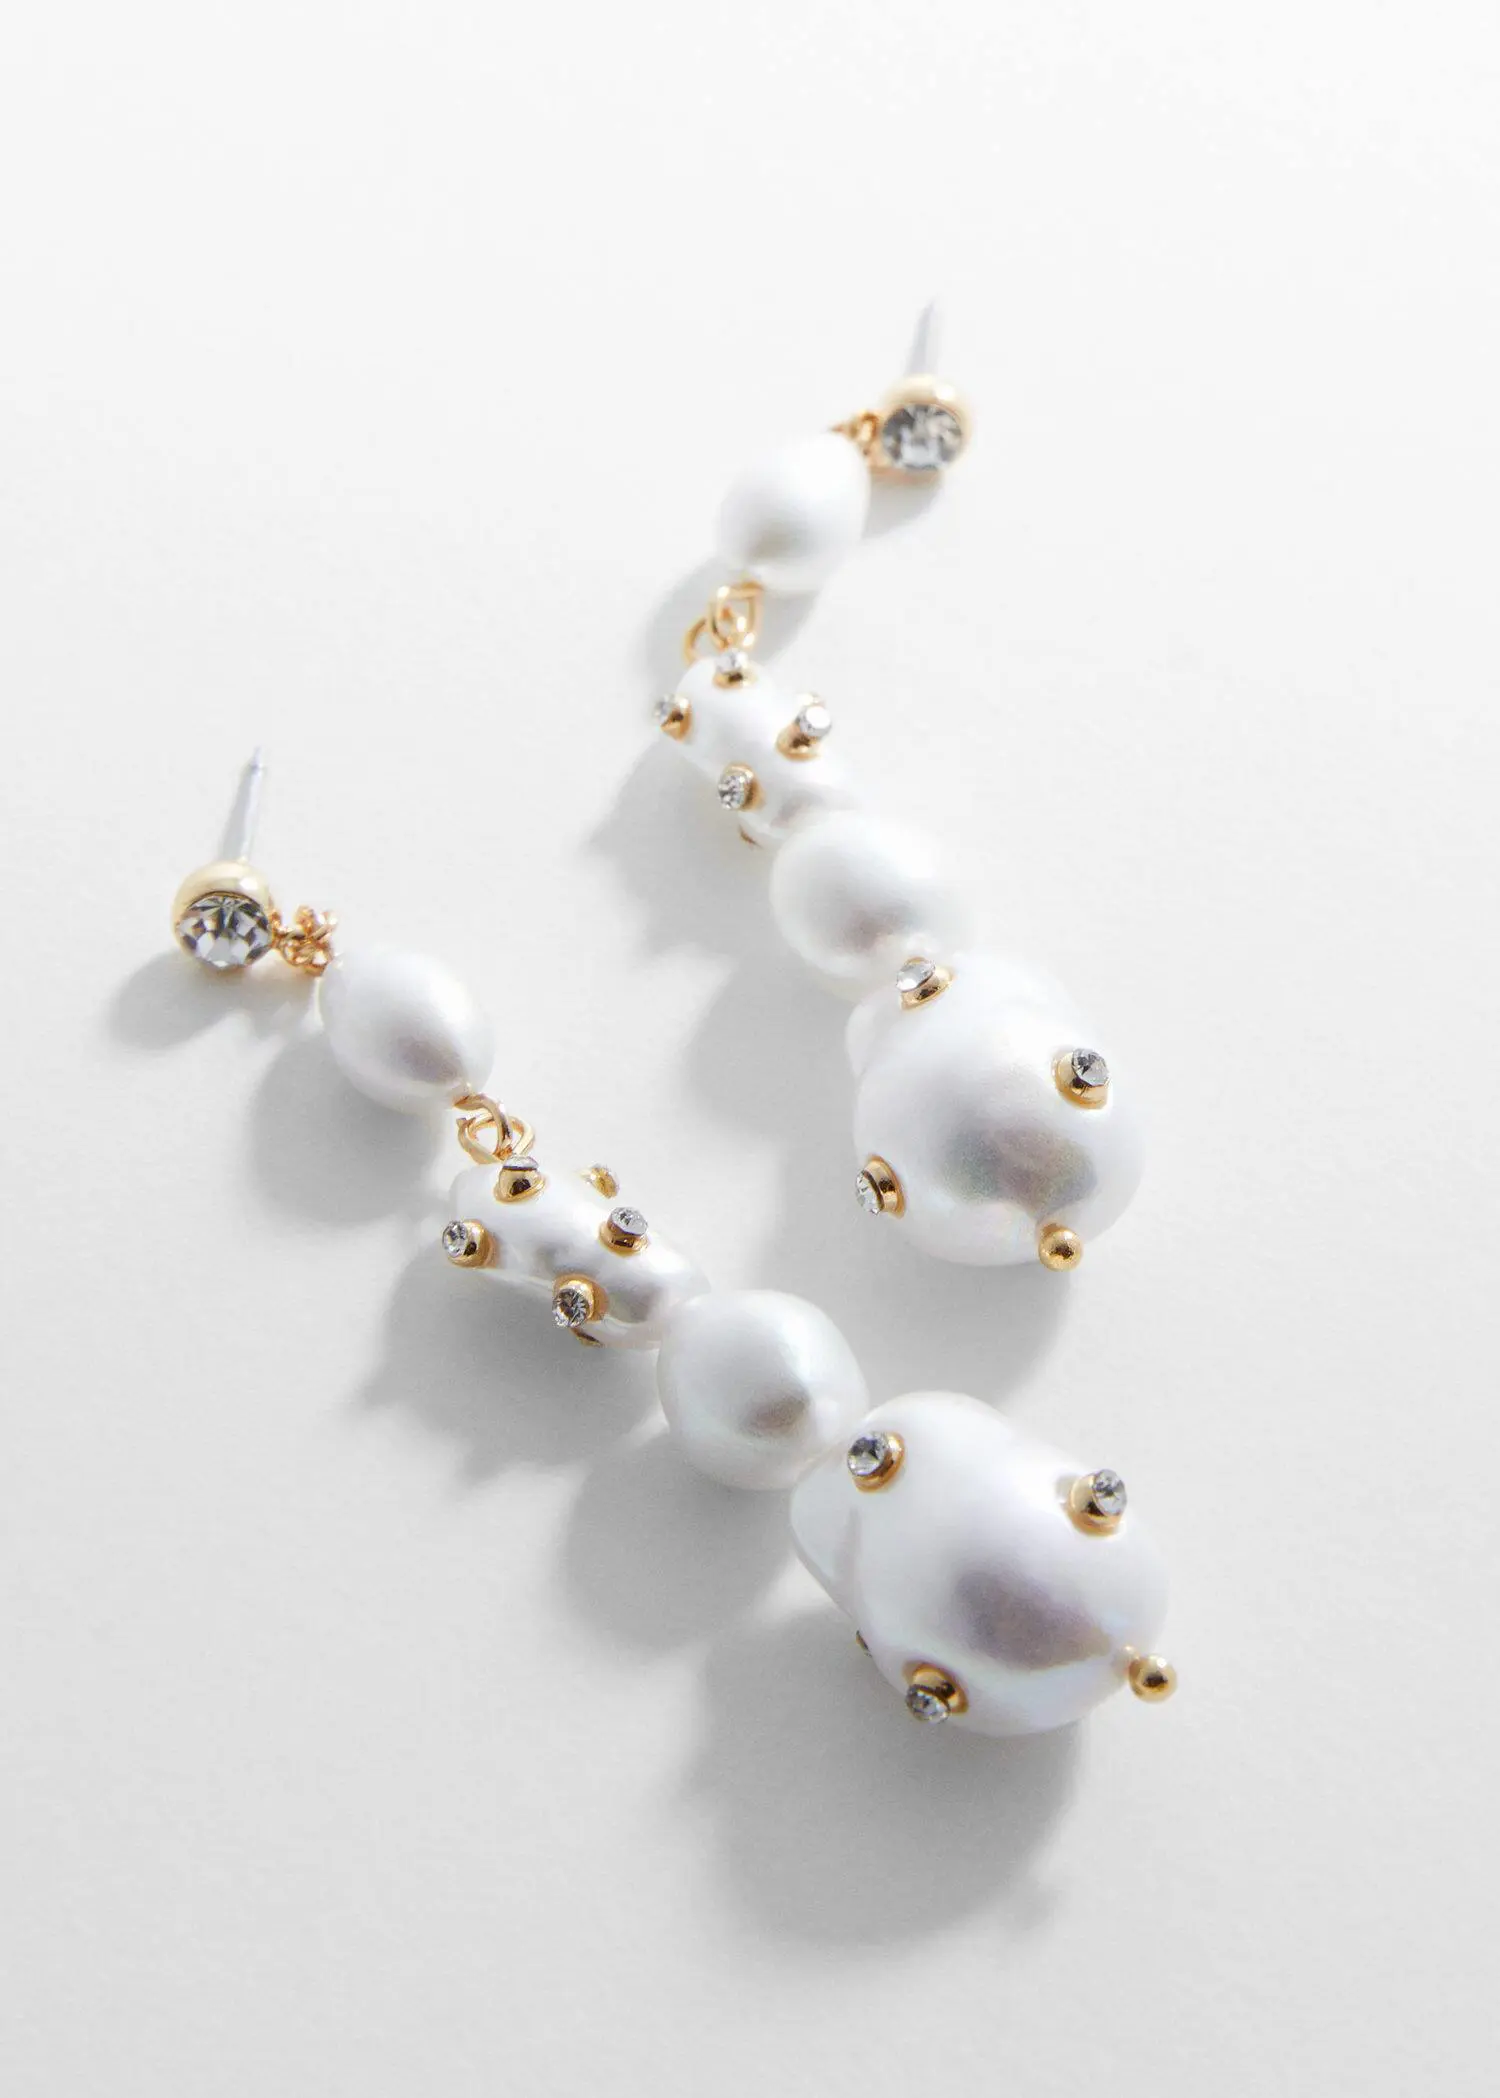 Mango Pearl earrings with rhinestone detail. 2